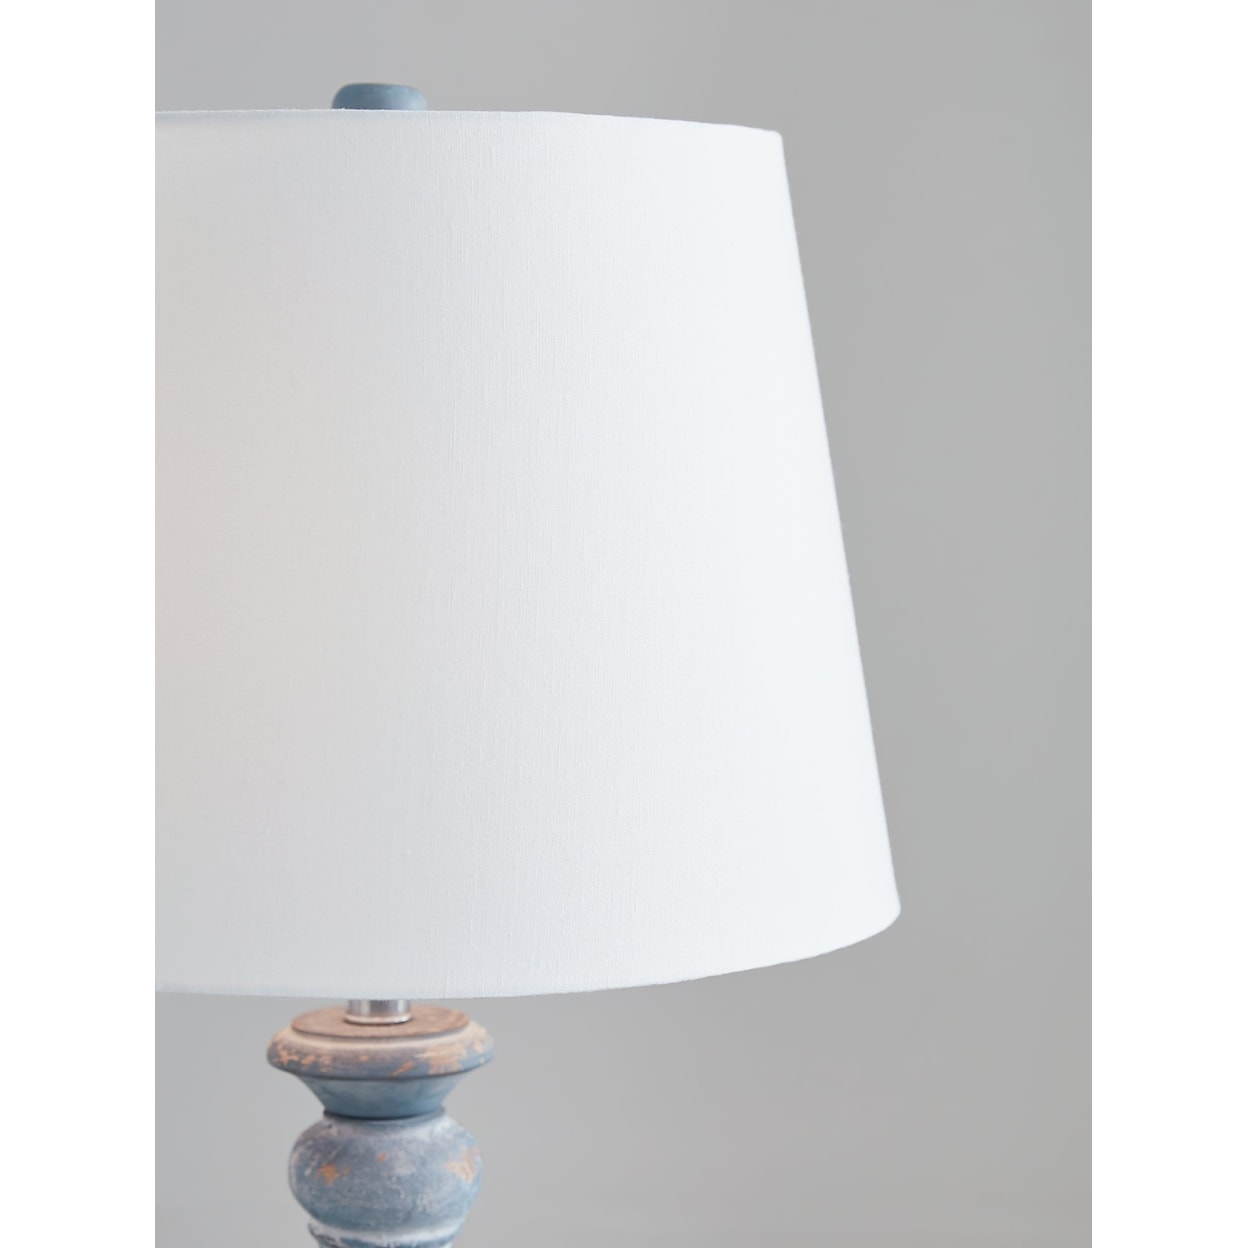 Ashley Furniture Signature Design Cylerick Terracotta Table Lamp